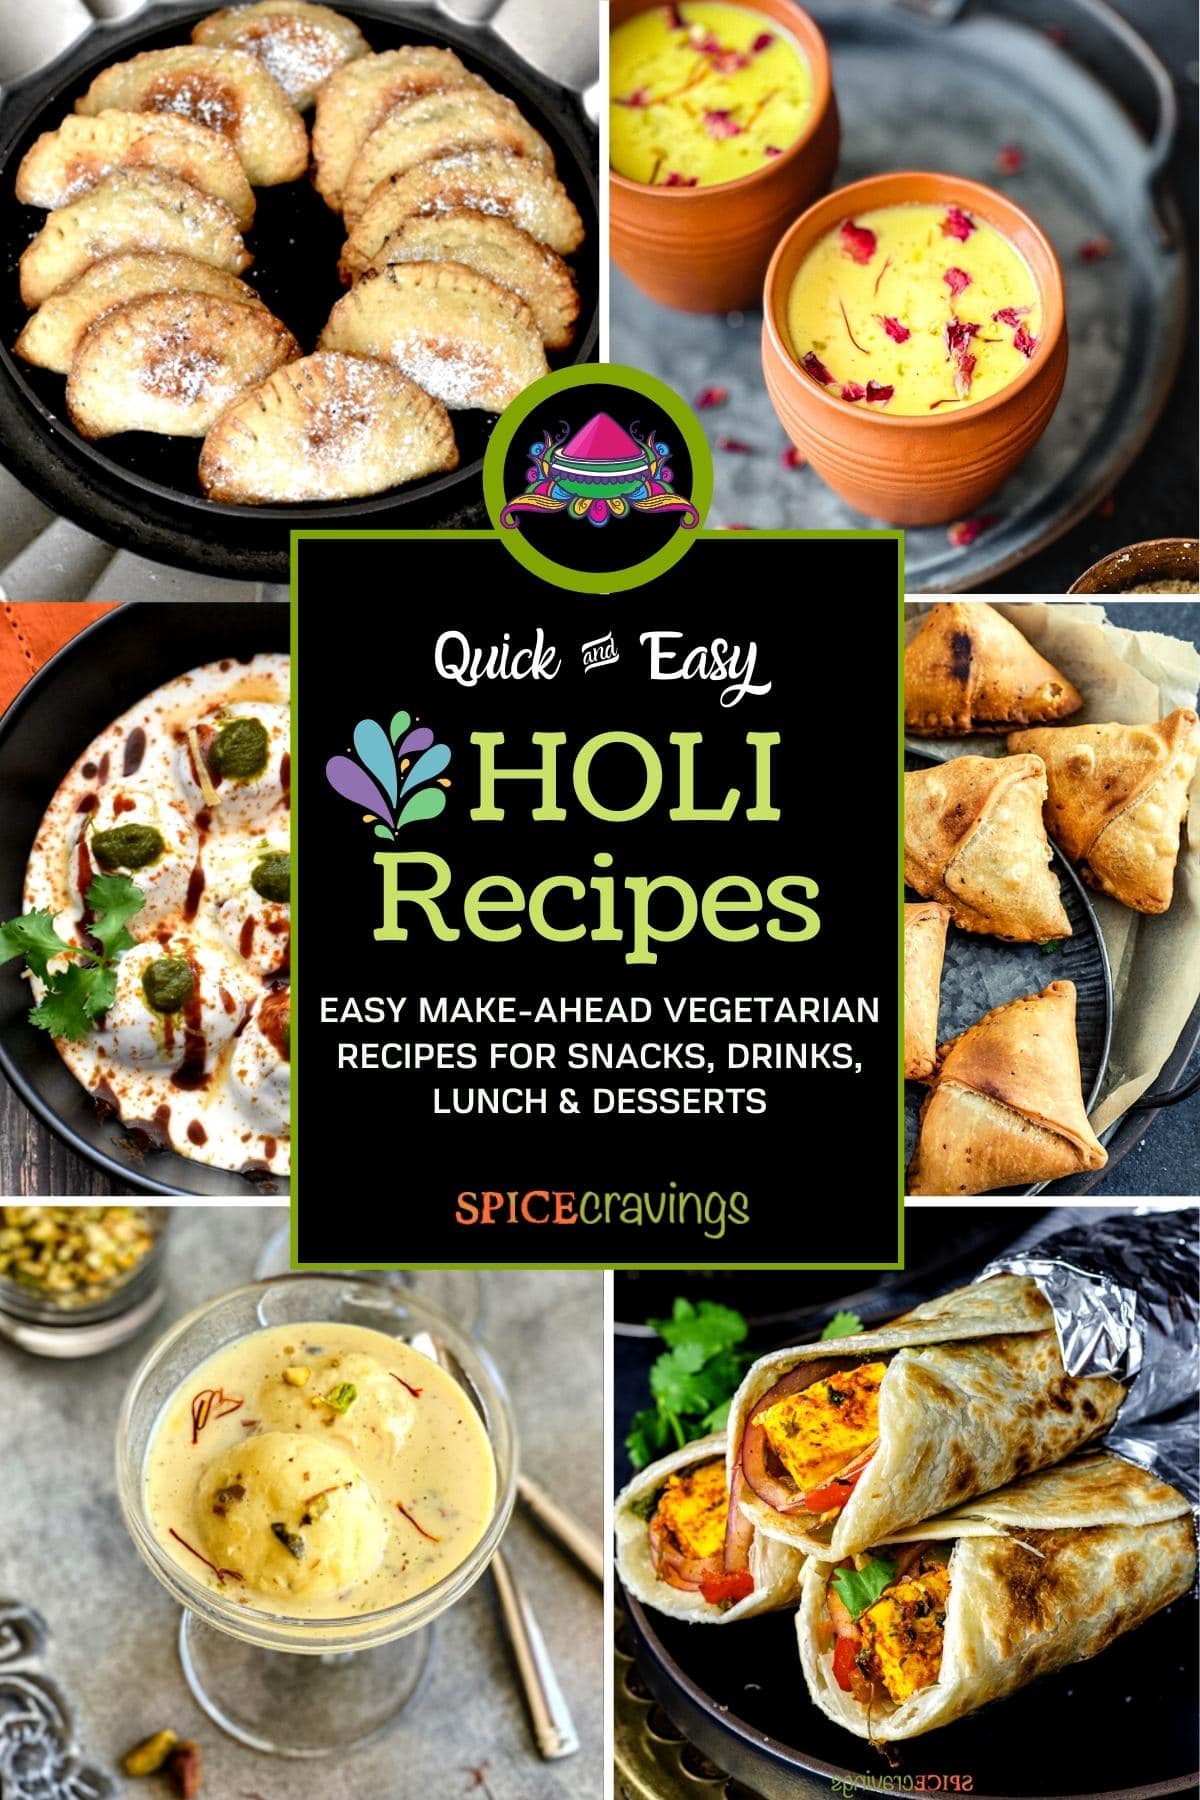 6-image collage of holi recipes including gujiya, thandai, and samosa